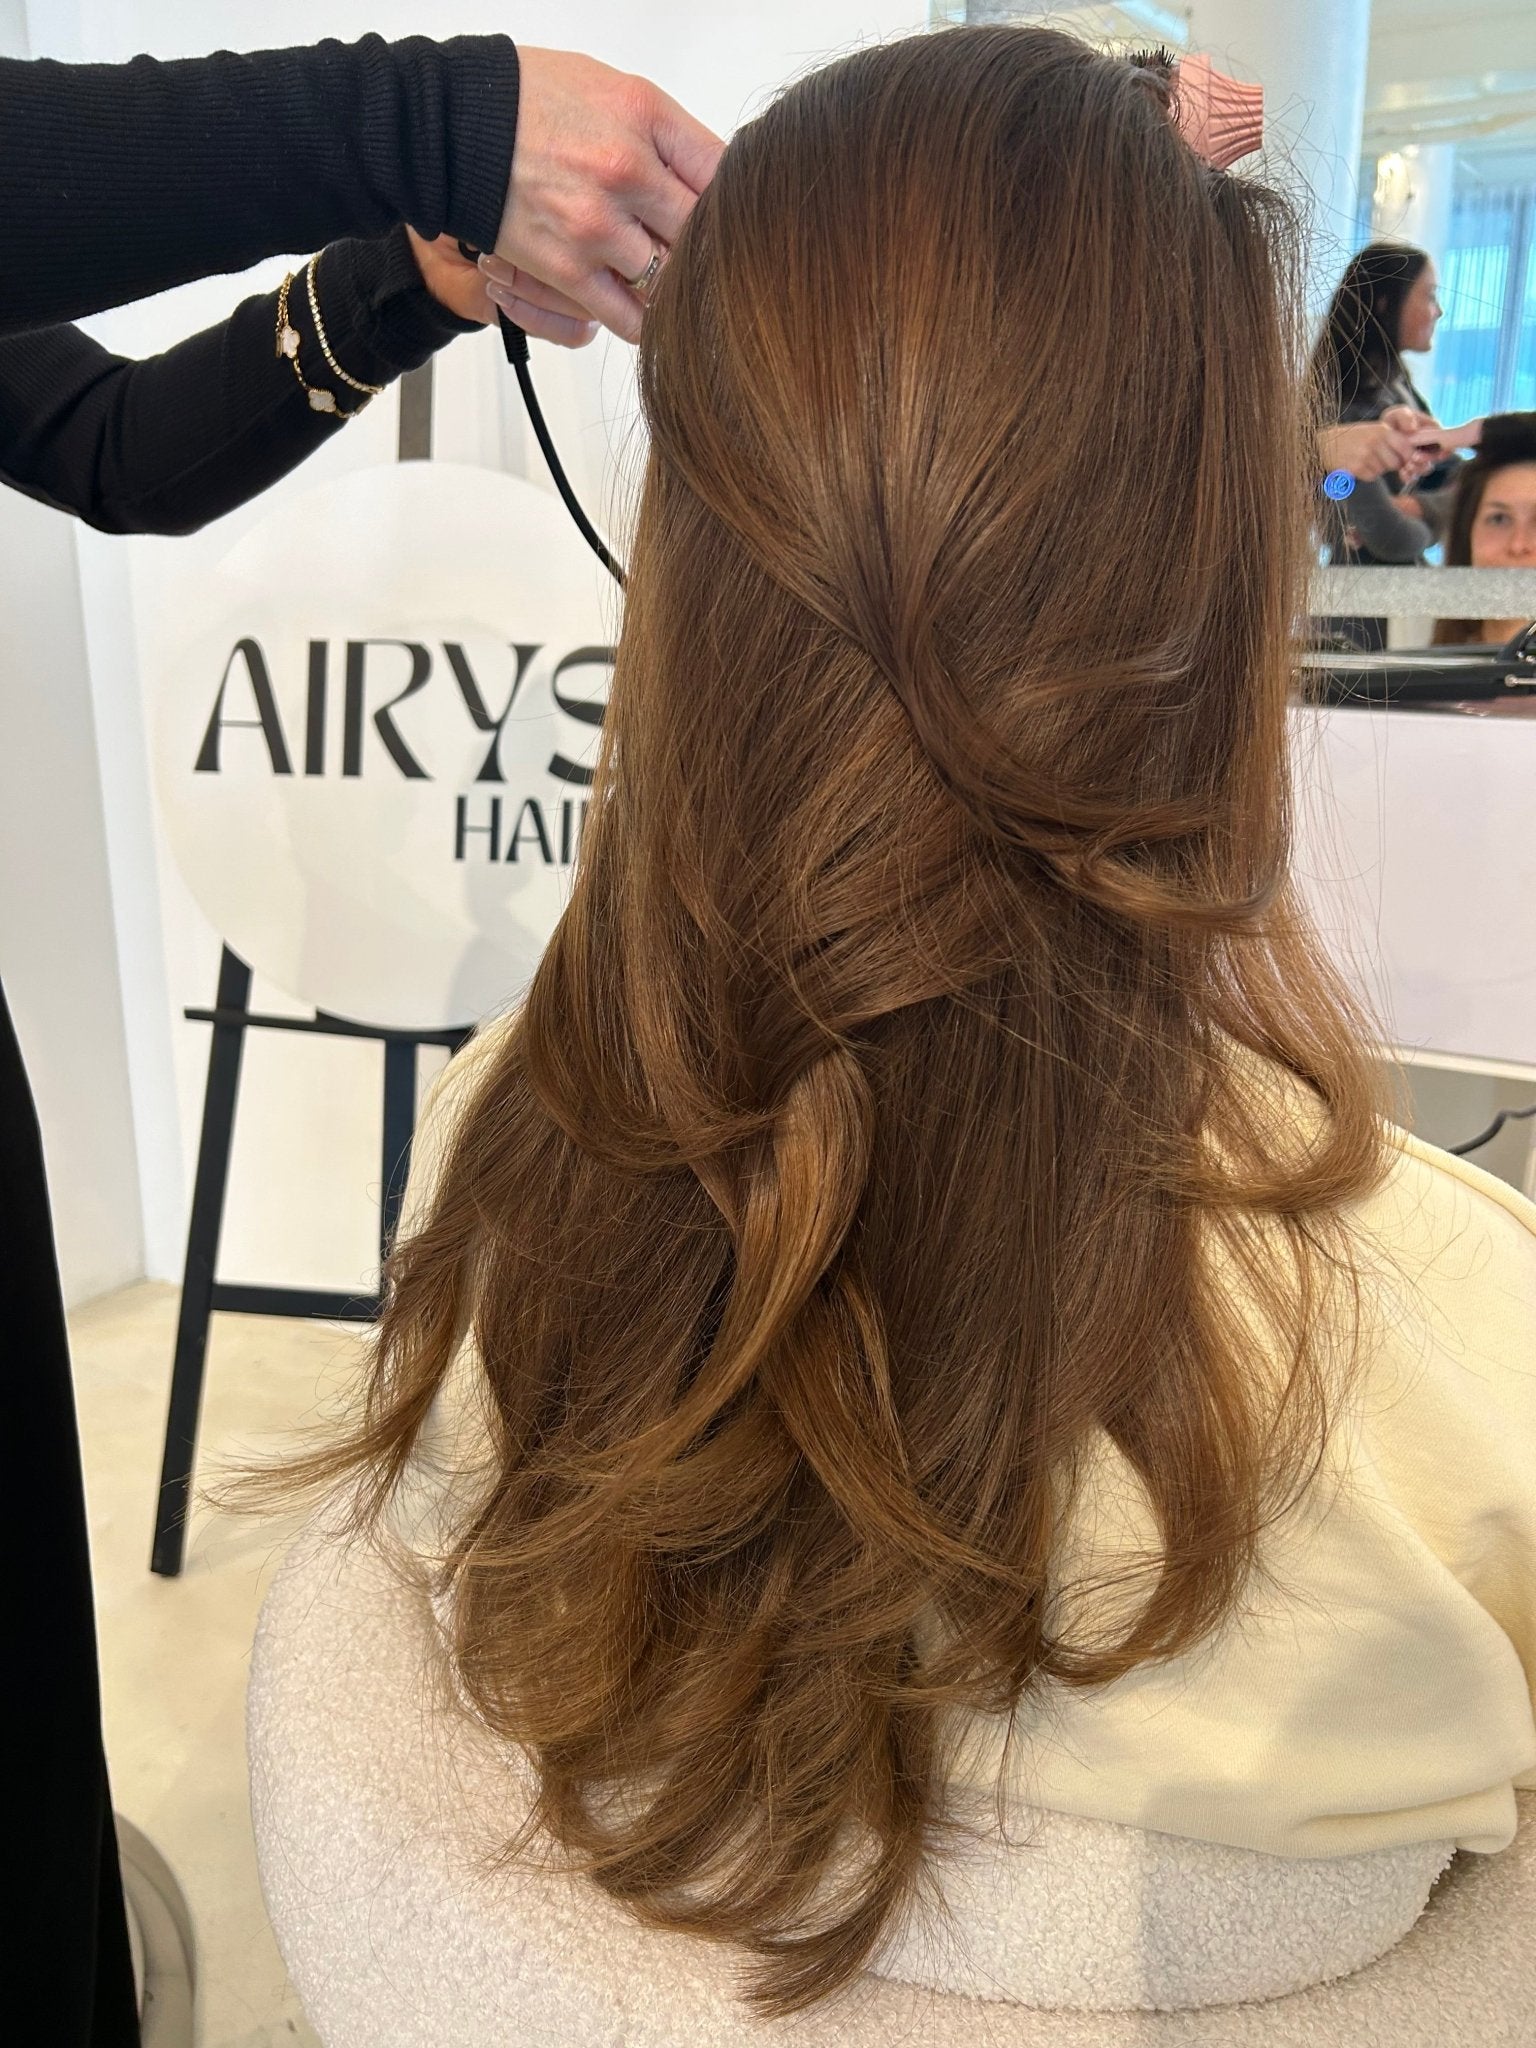 Airys Bouncy Blowdry Brush - Airys Hair